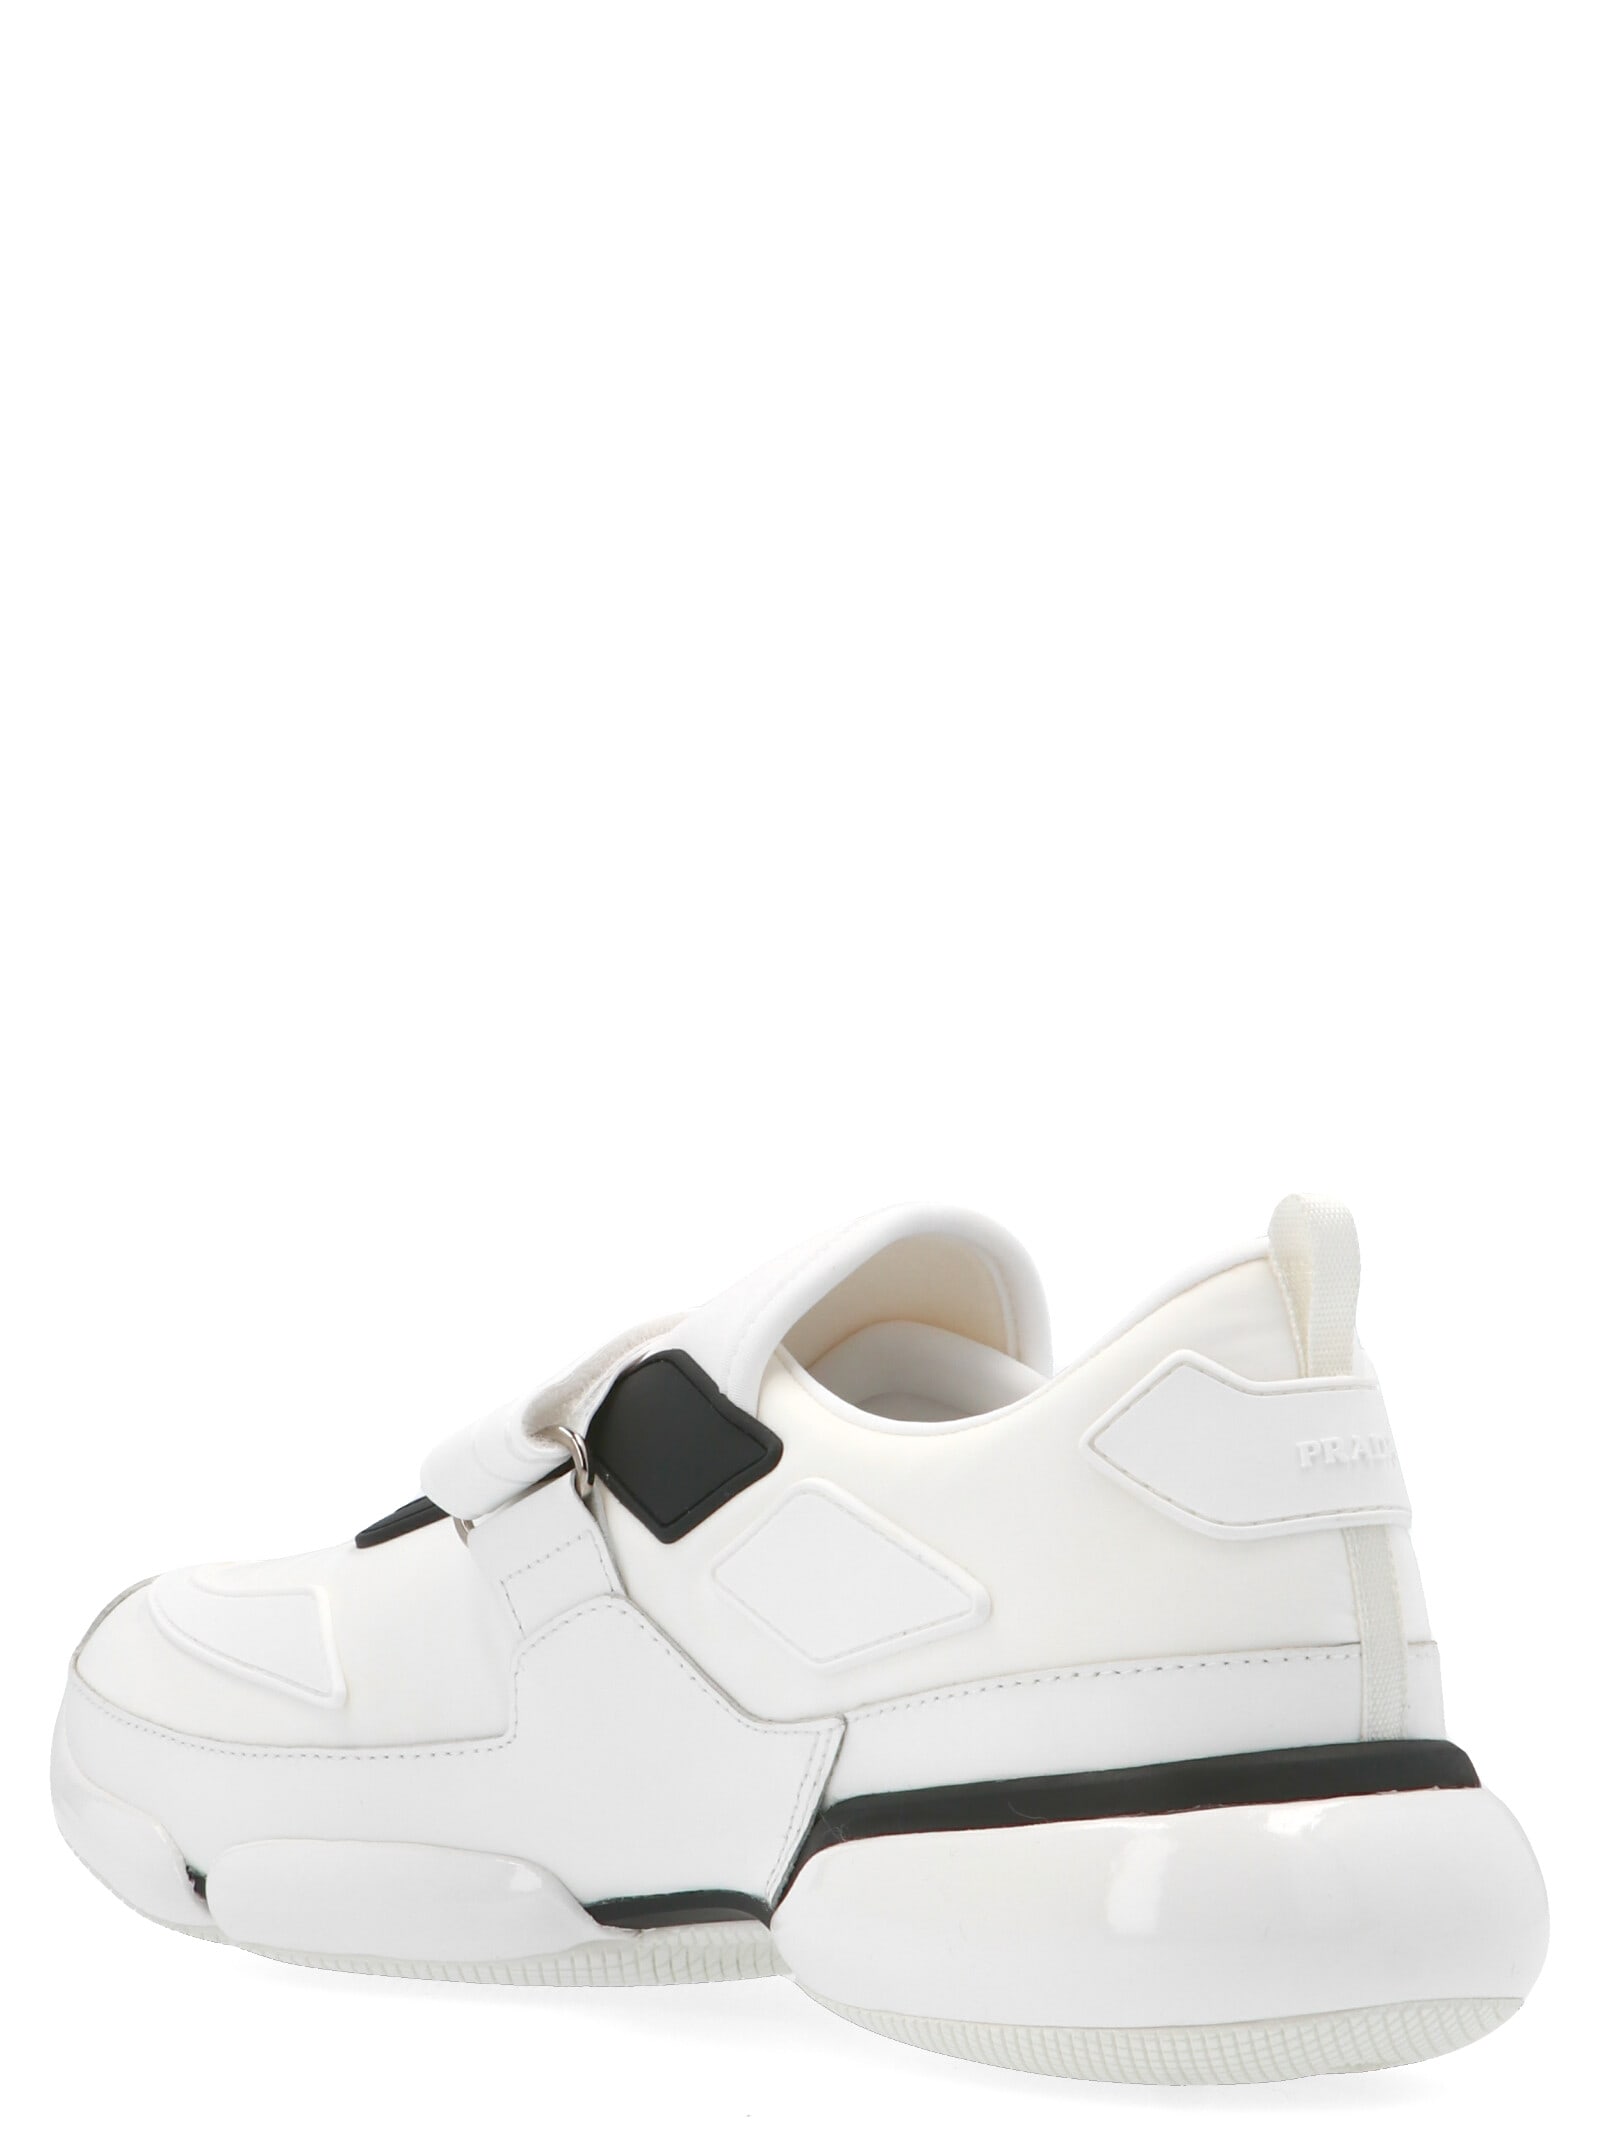 Prada Prada 'cloudbuster' Shoes - White - 10999999 | italist